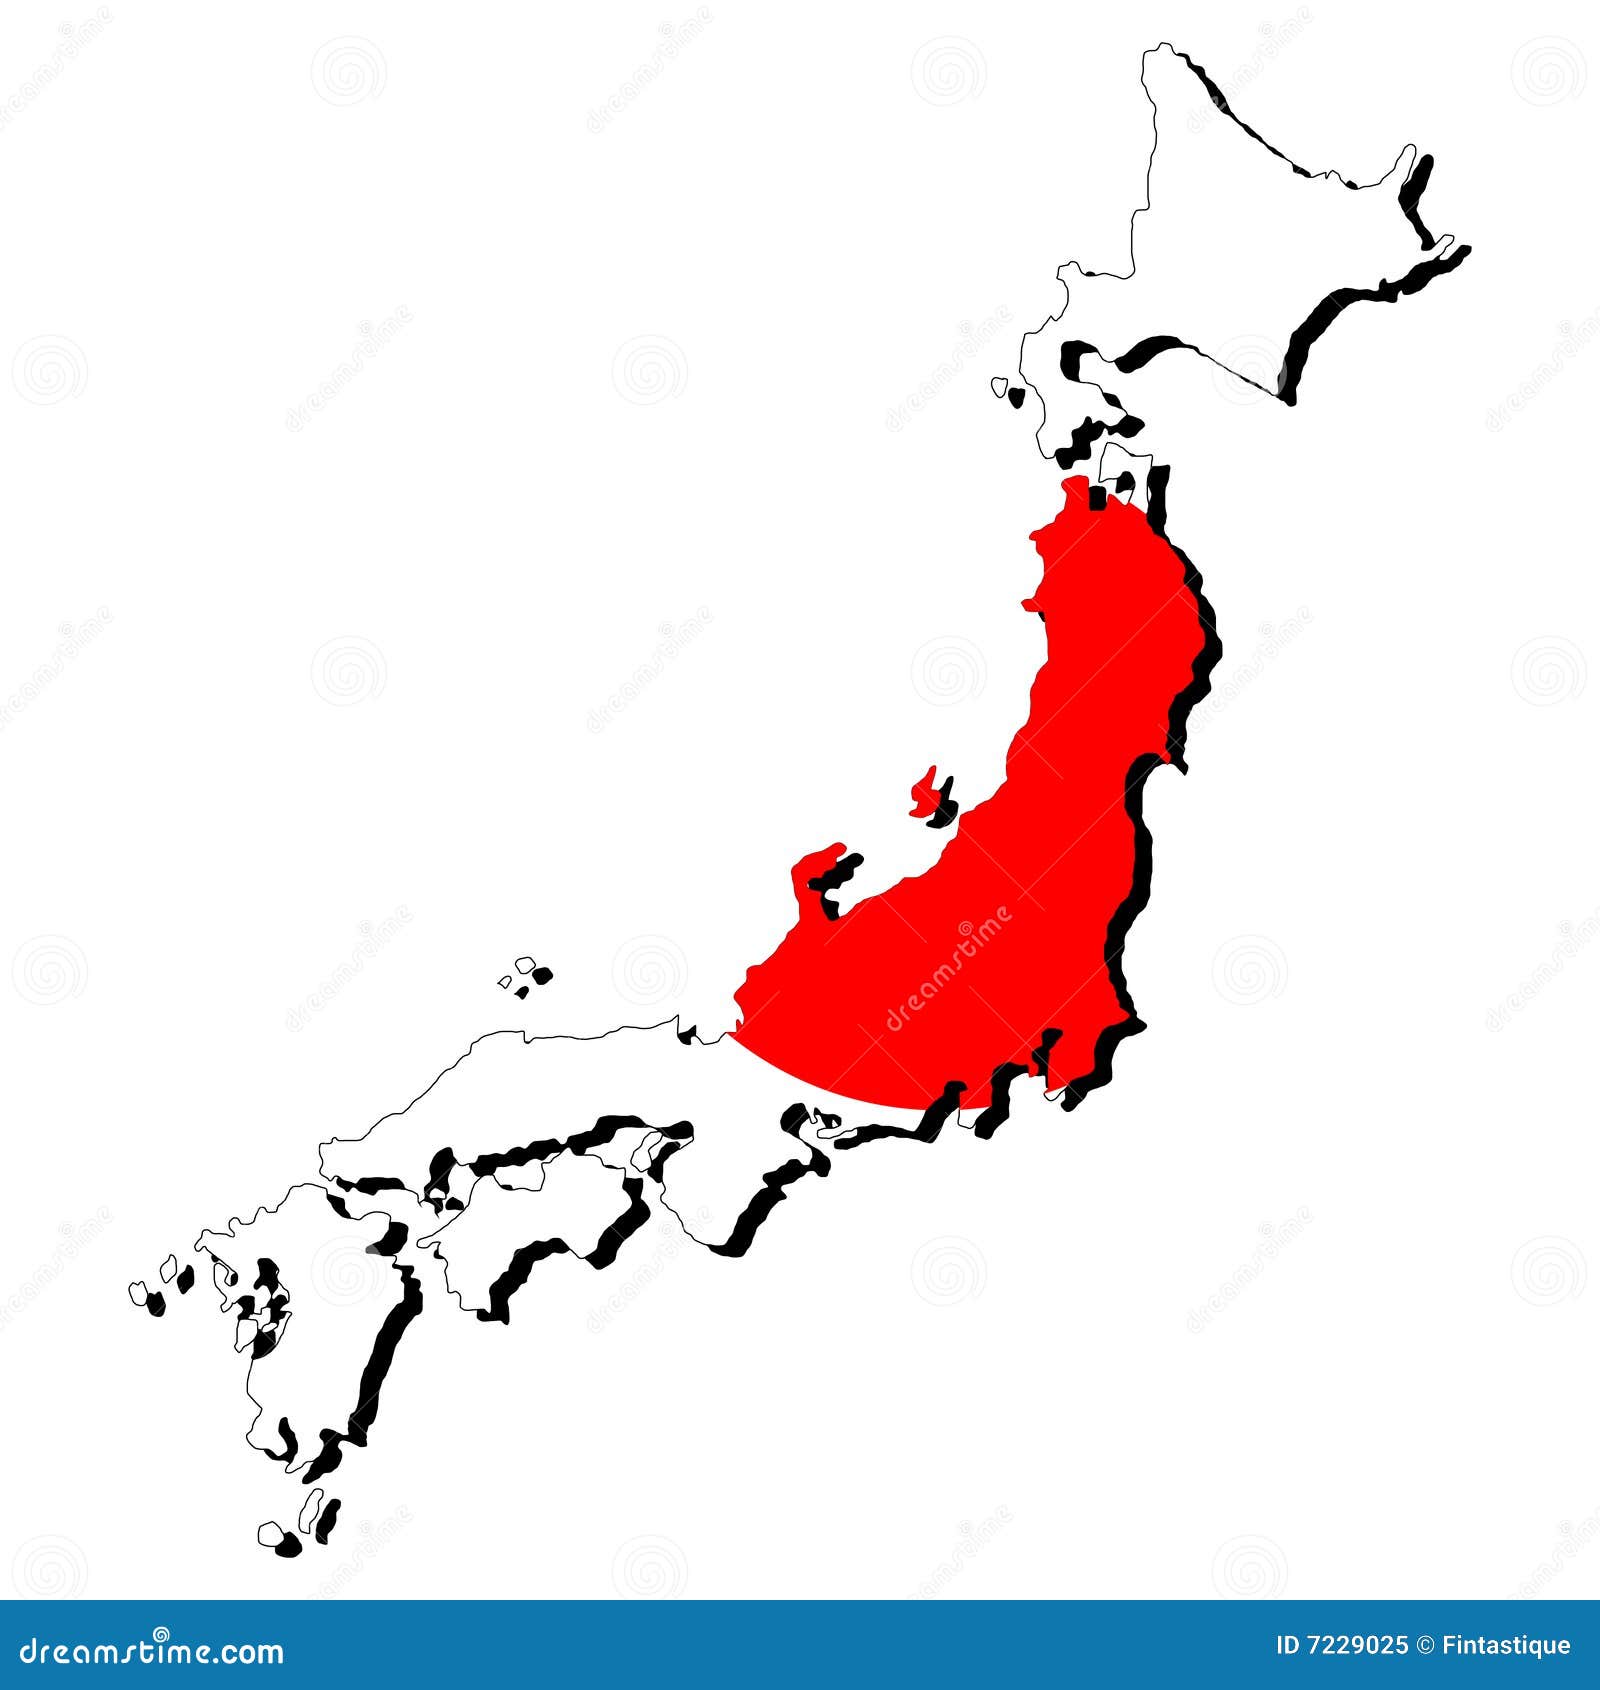 clipart japan map - photo #38